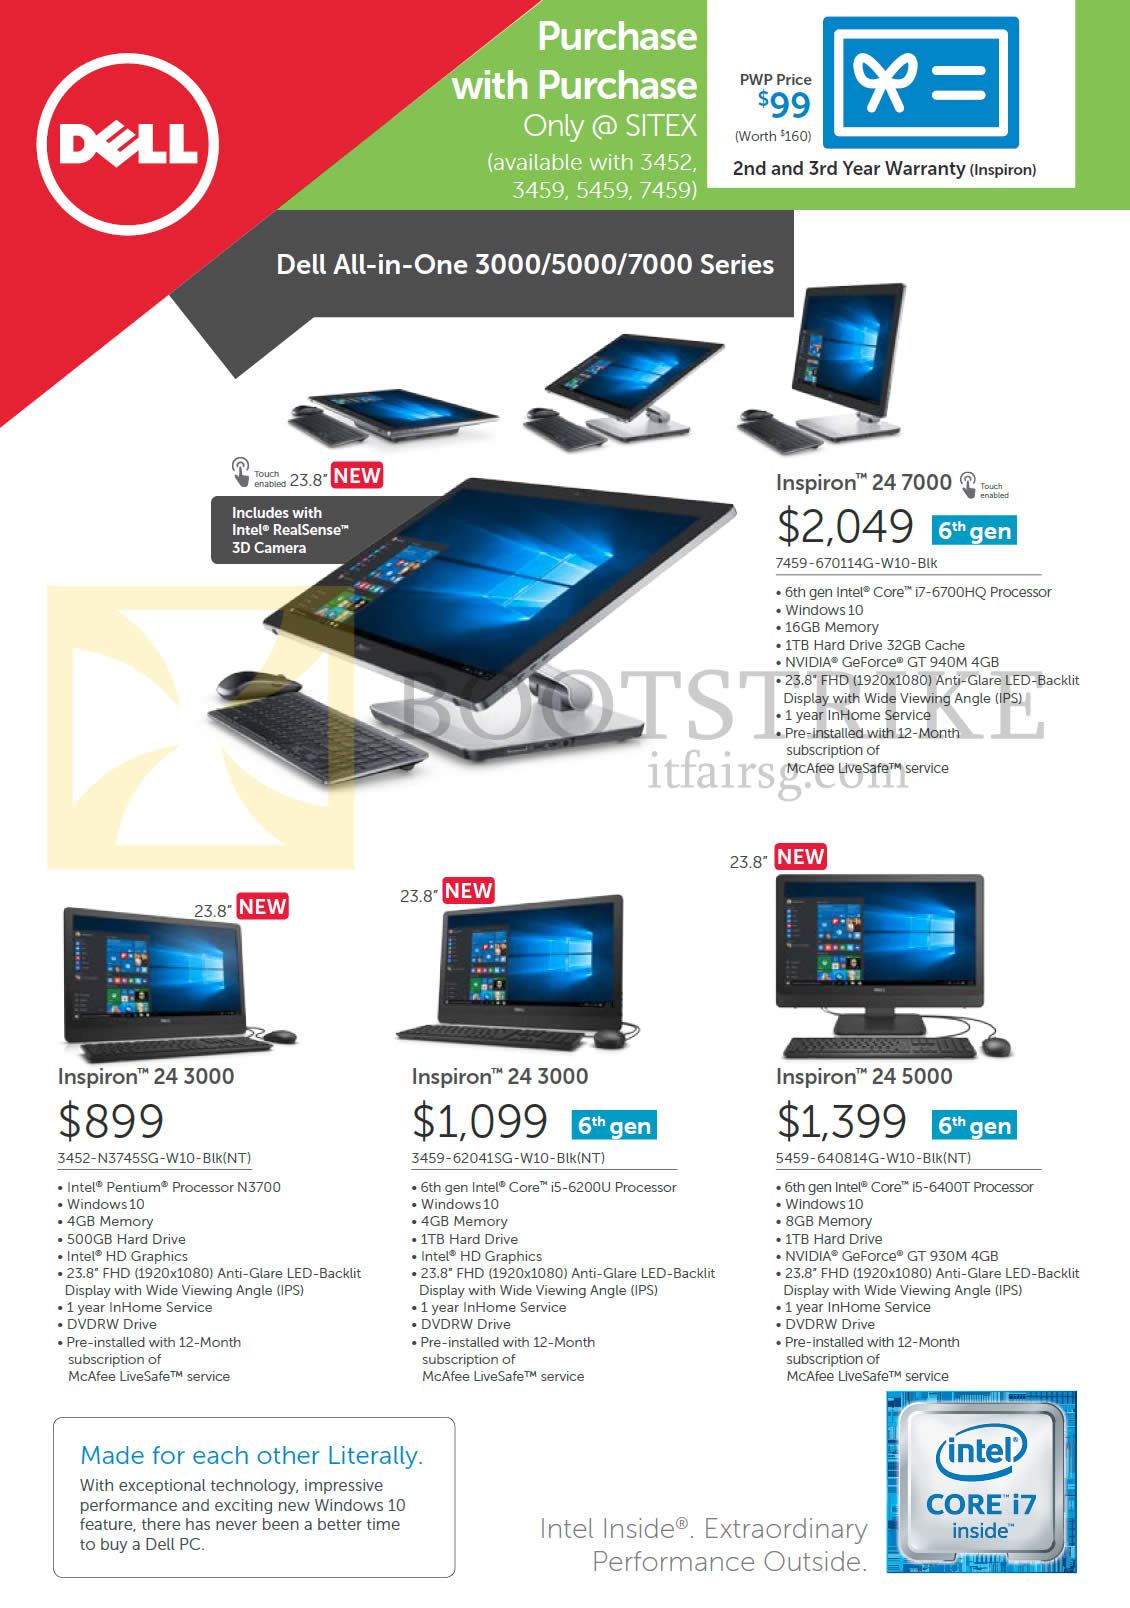 SITEX 2015 price list image brochure of Dell AIO Desktop PCs Inspiron 24 7459-670114G-W10-Blk, 3452-N3745SG-W10-Blk, 3459- 62041SG-W10- Blk, 5459-640814G-W10-Blk